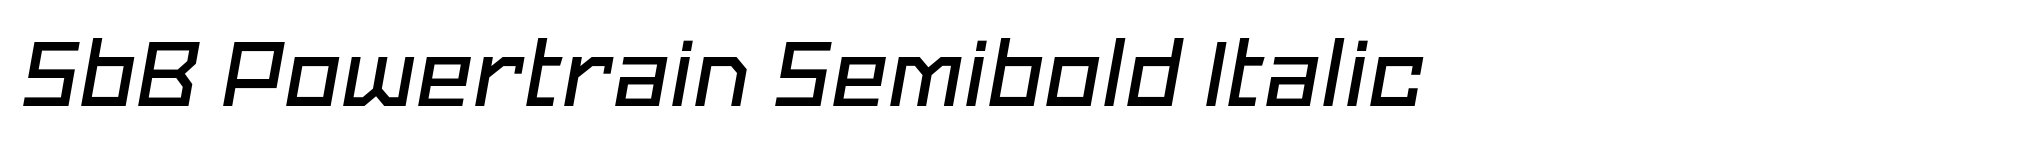 SbB Powertrain Semibold Italic image